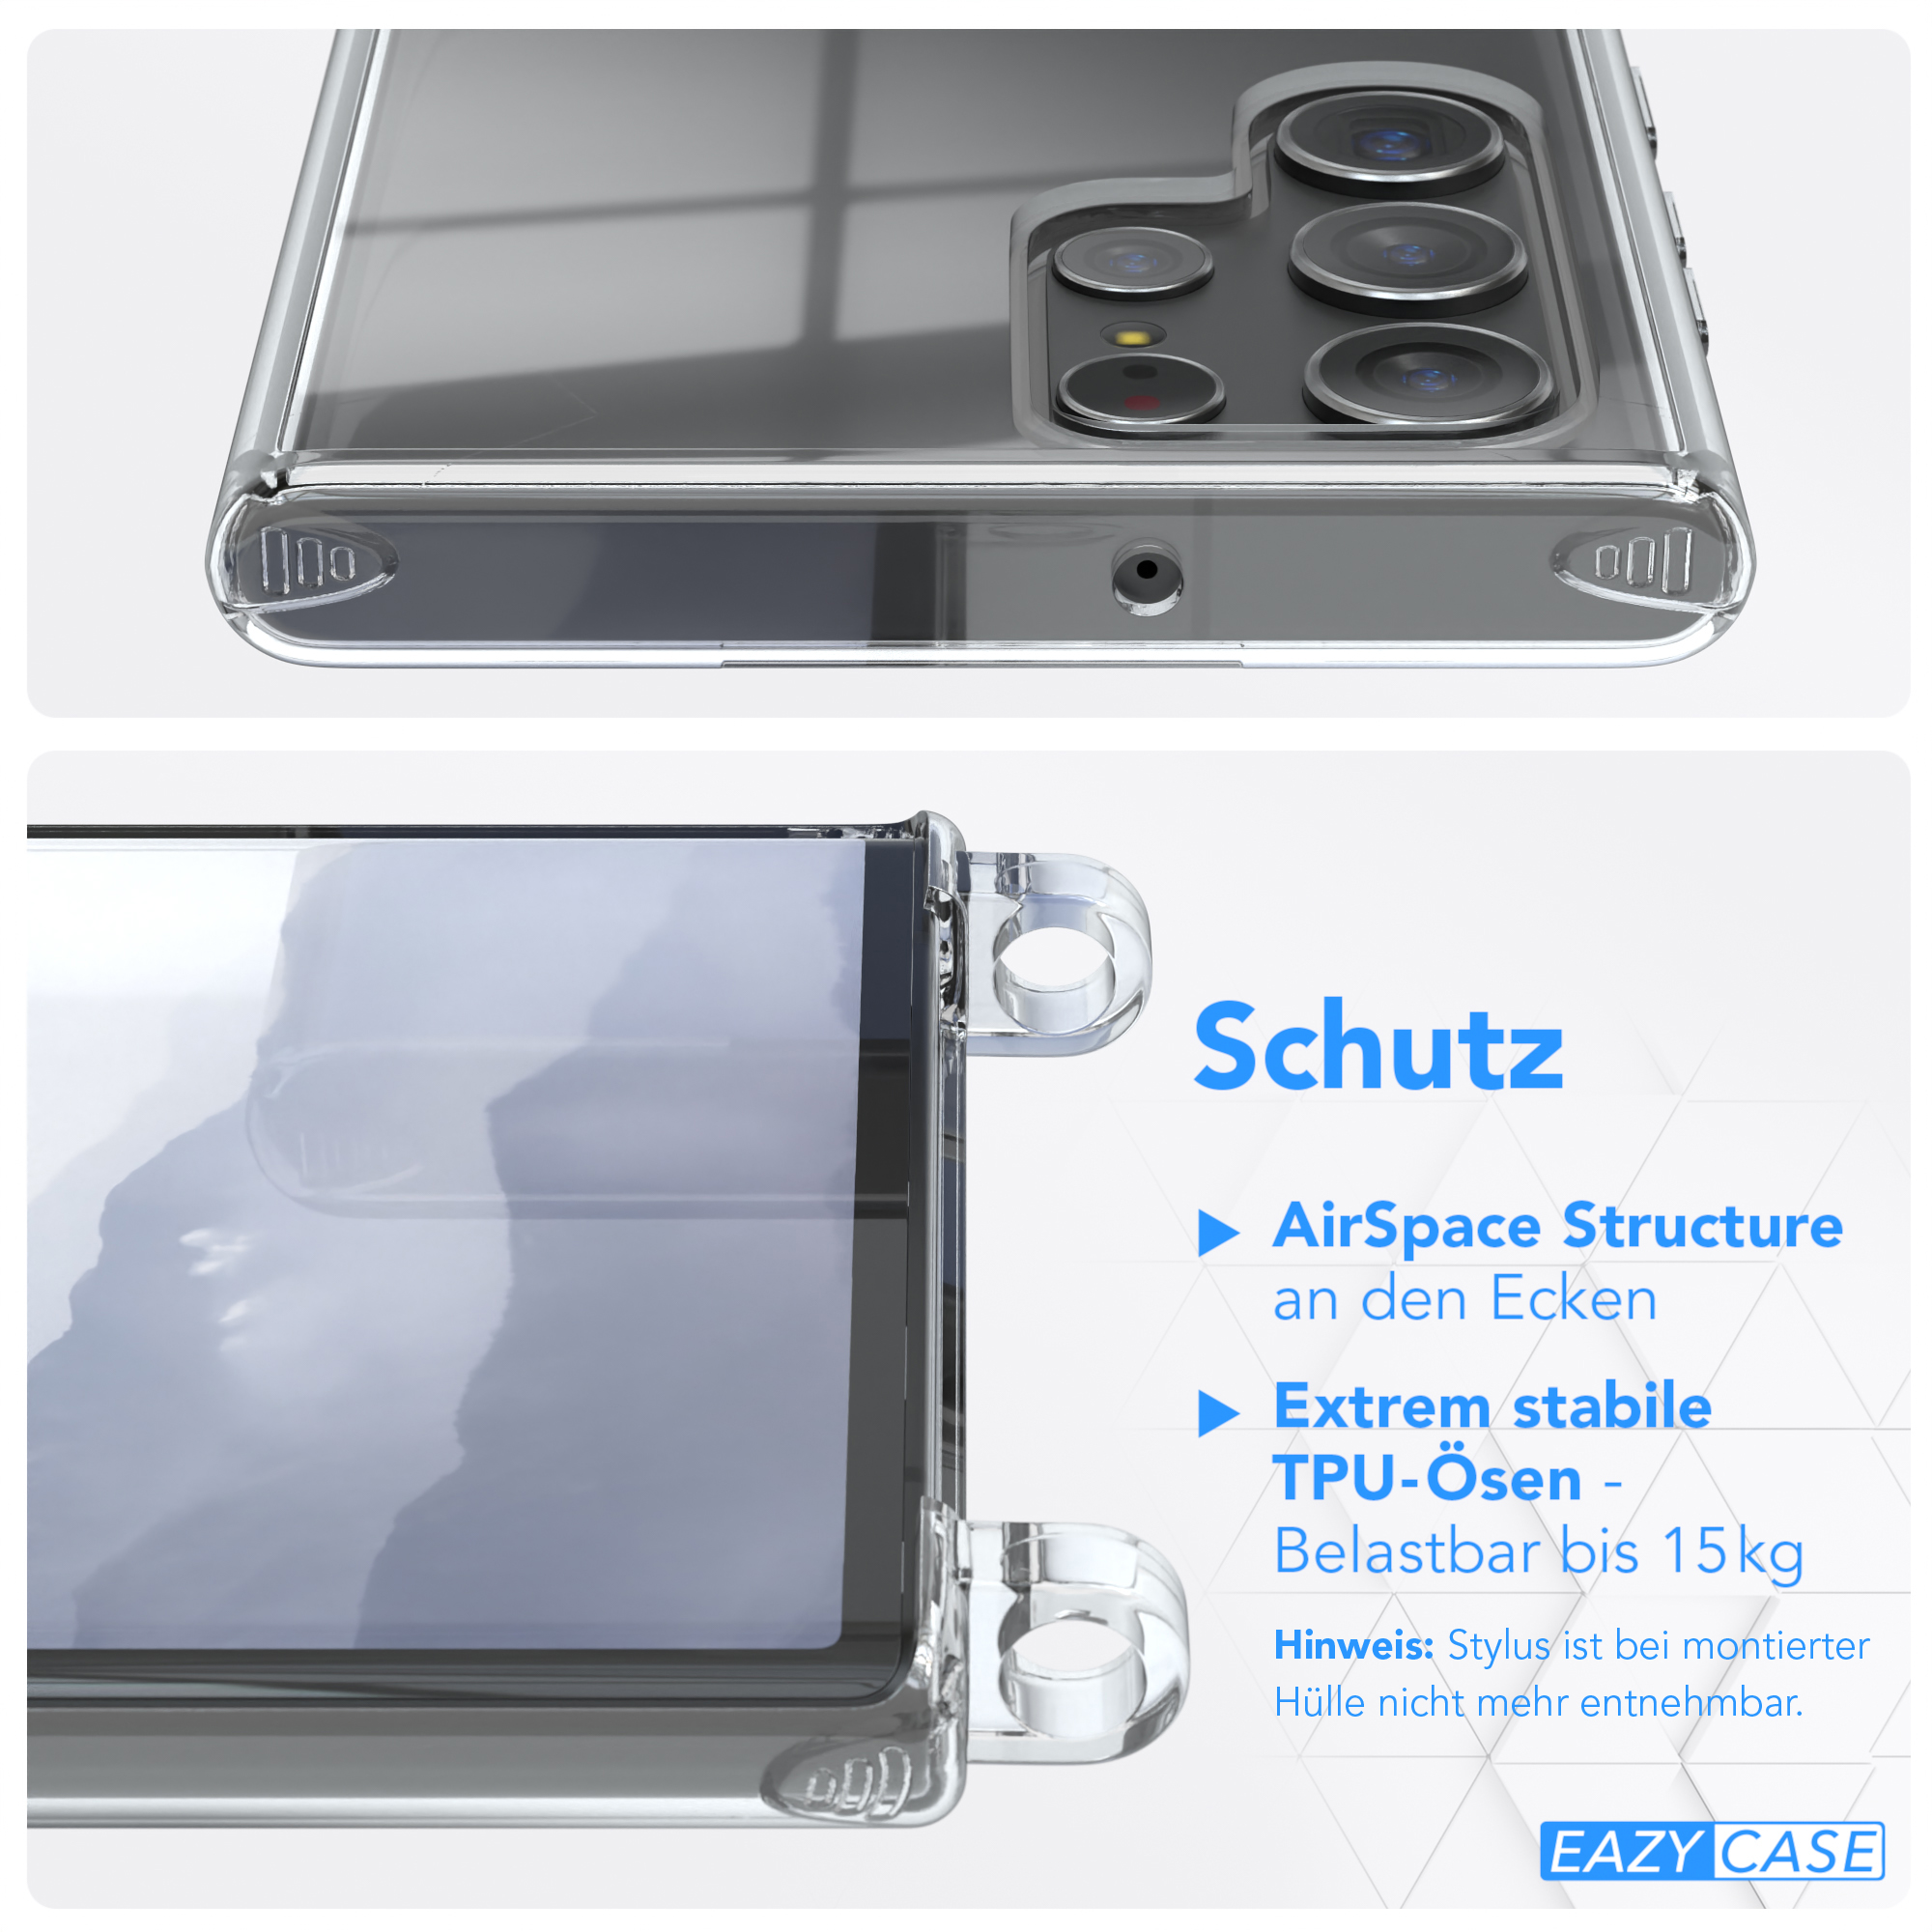 Ultra Cover EAZY S22 Clear Galaxy CASE mit Samsung, Umhängetasche, Umhängeband, Blau 5G,